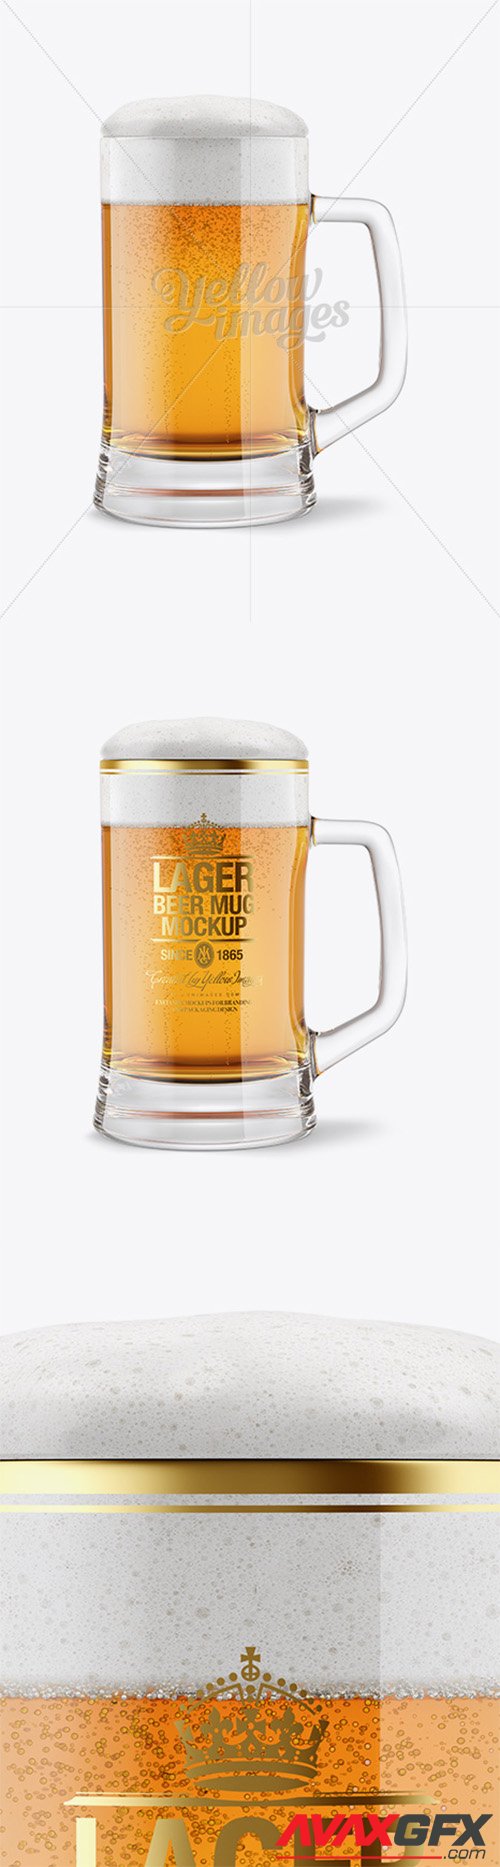 Tankard Glass Mug with Lager Beer Mockup 14664